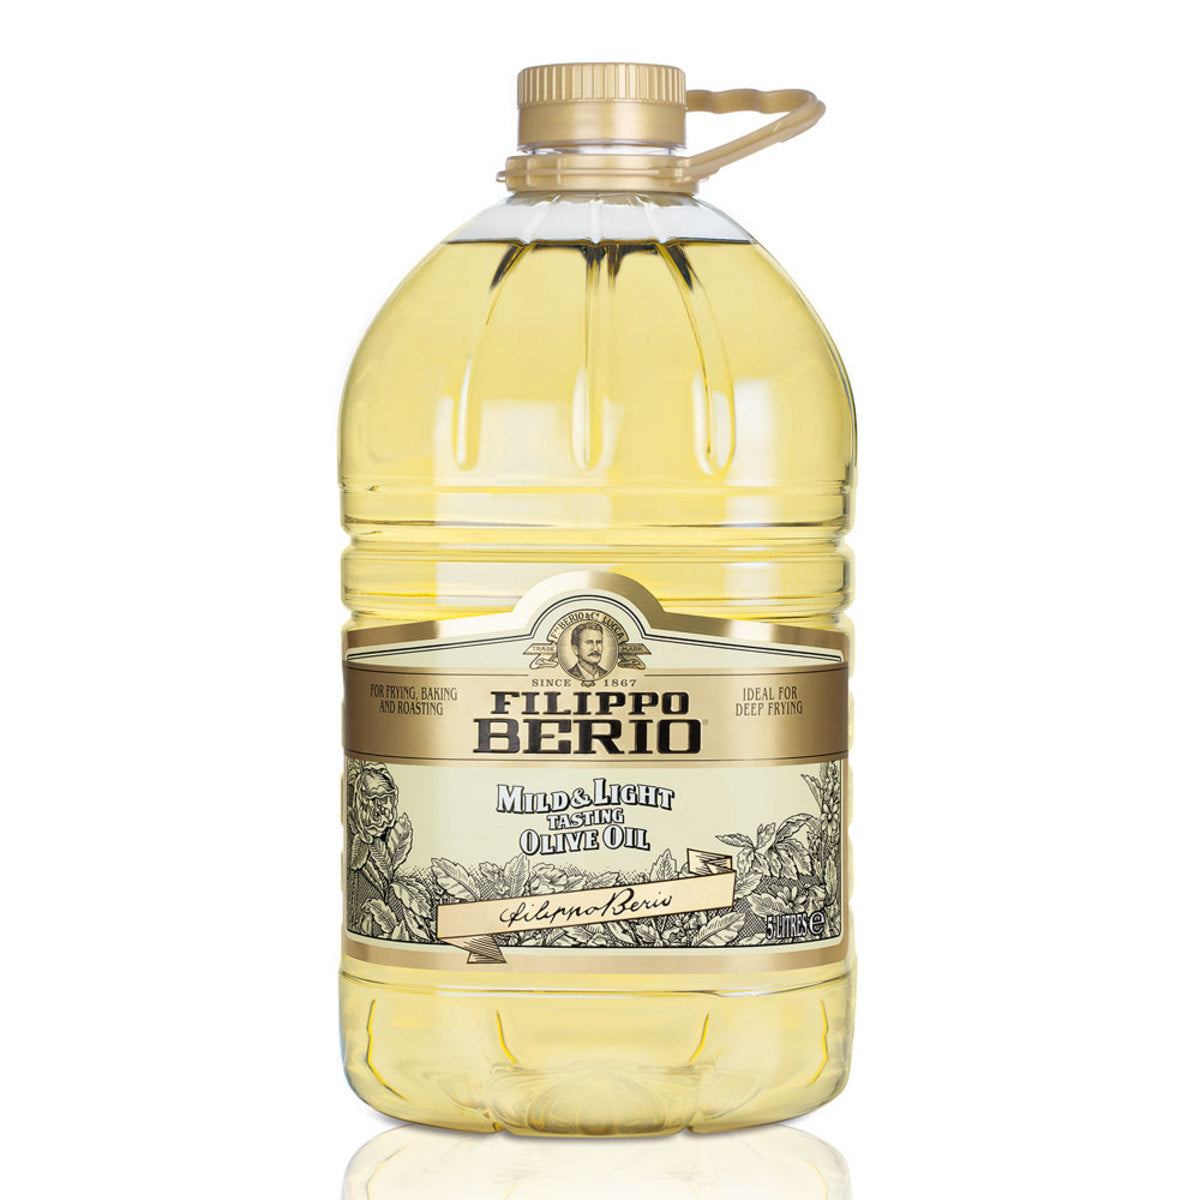 Filippo Berio Mild & Light Olive Oil, 5L - McGrocer